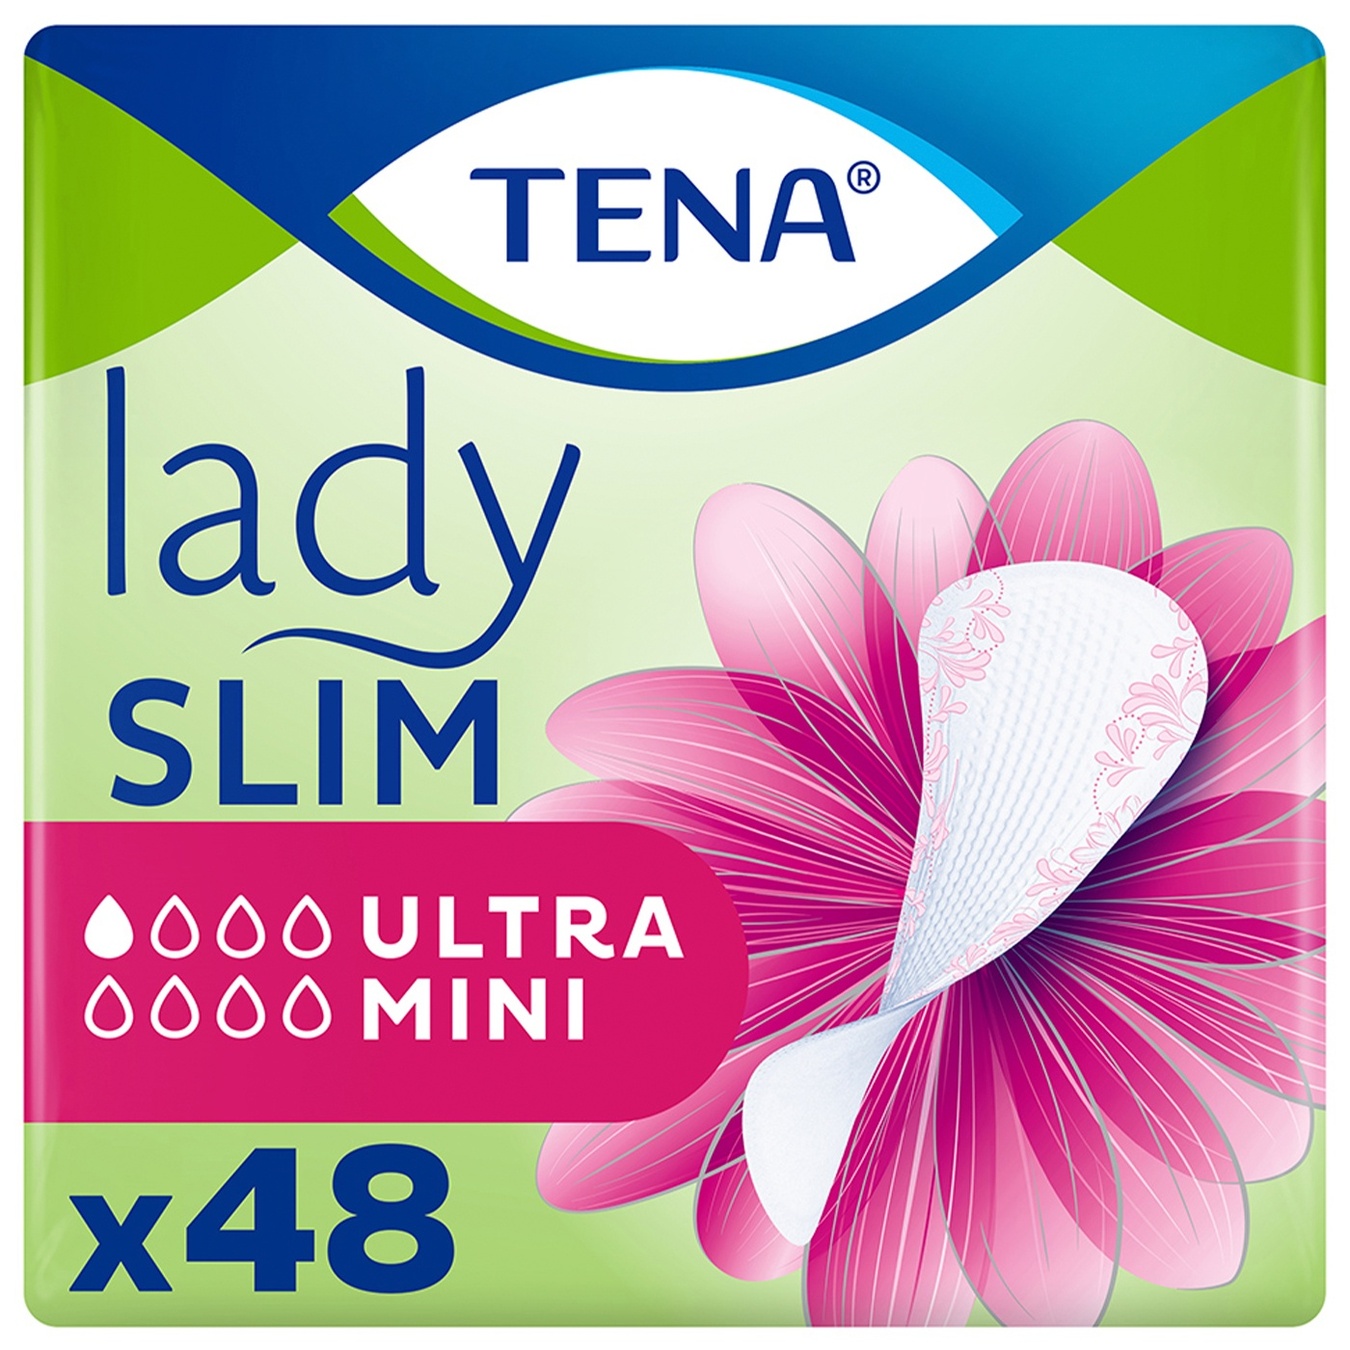 Urological pads for women Tena Lady Slim Ultra Mini 48